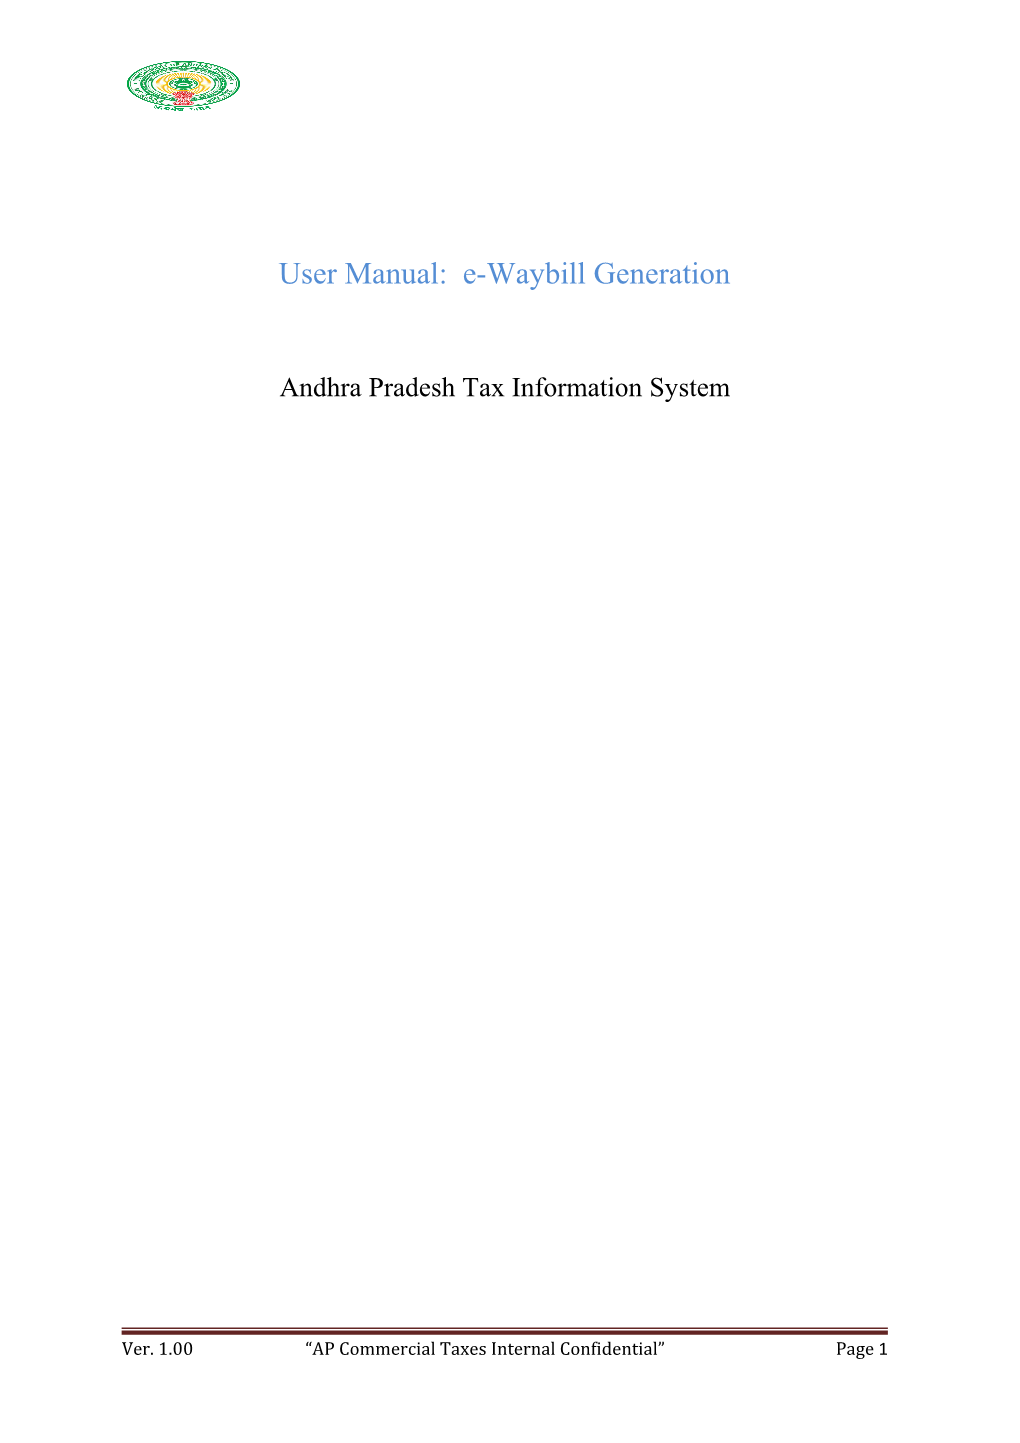 User Manual: E-Waybill Generation